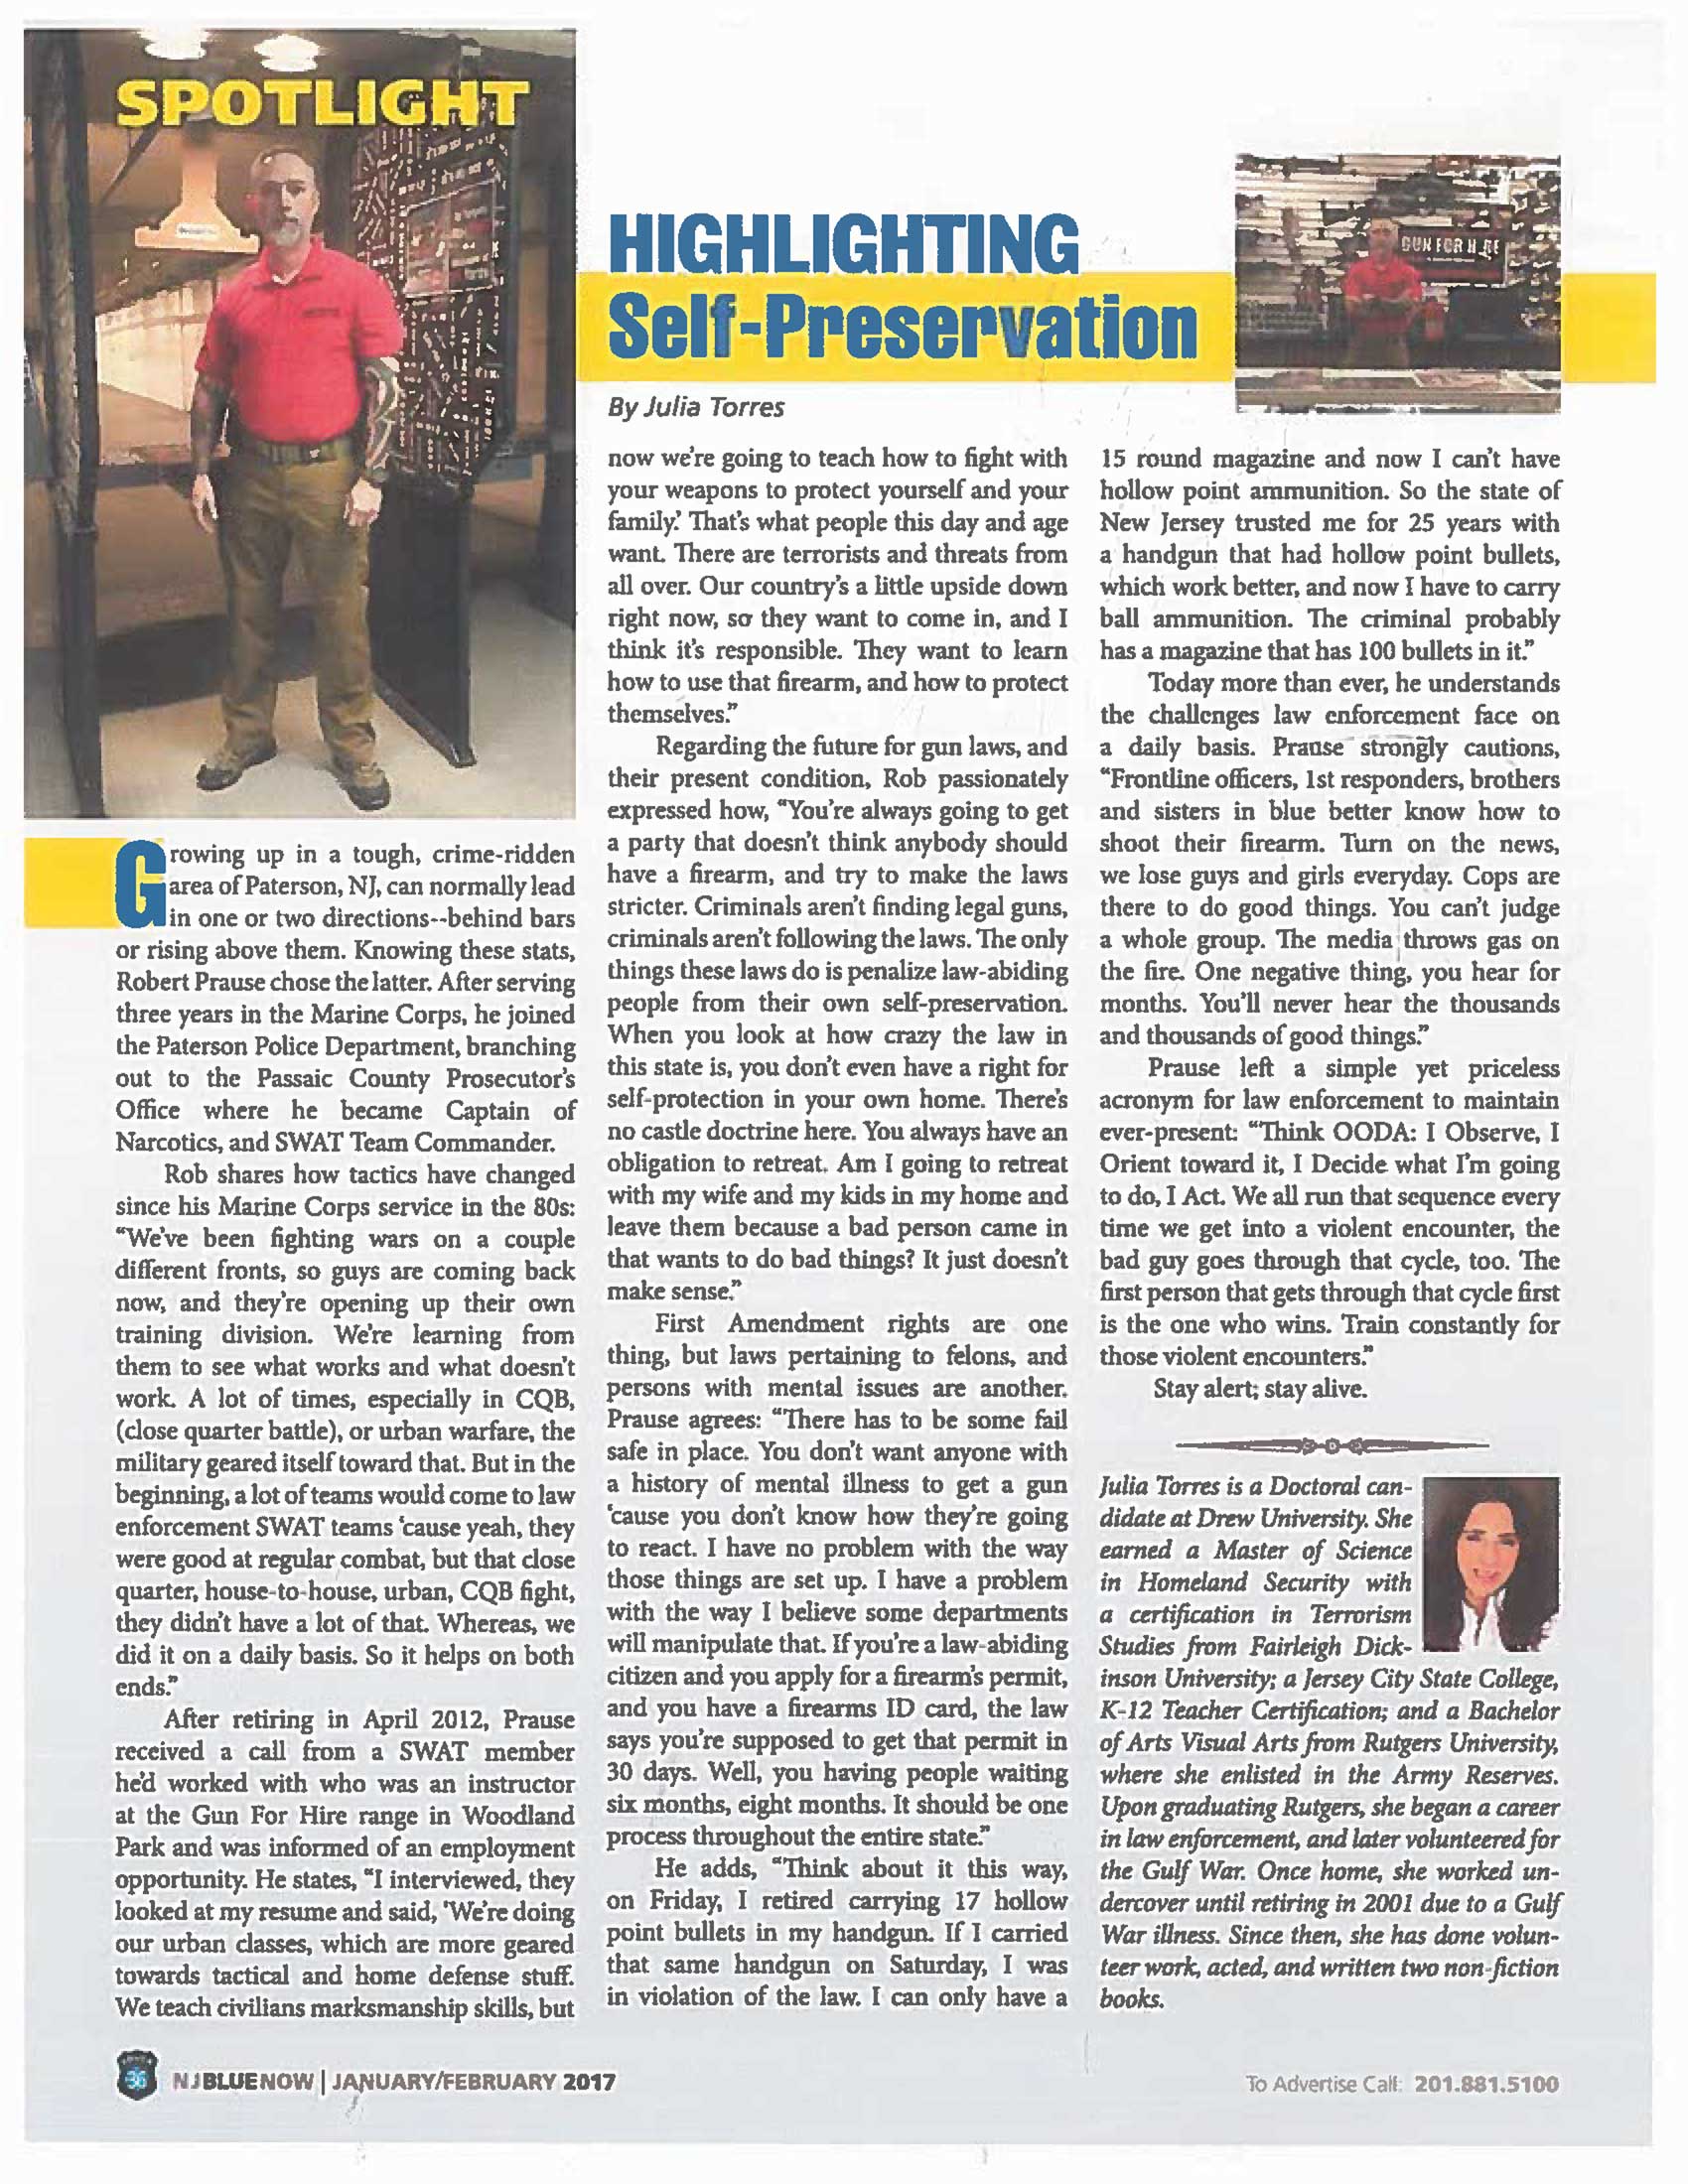 BobPraiseArticle - Article: Bob Prause - Highlighting Self Preservation